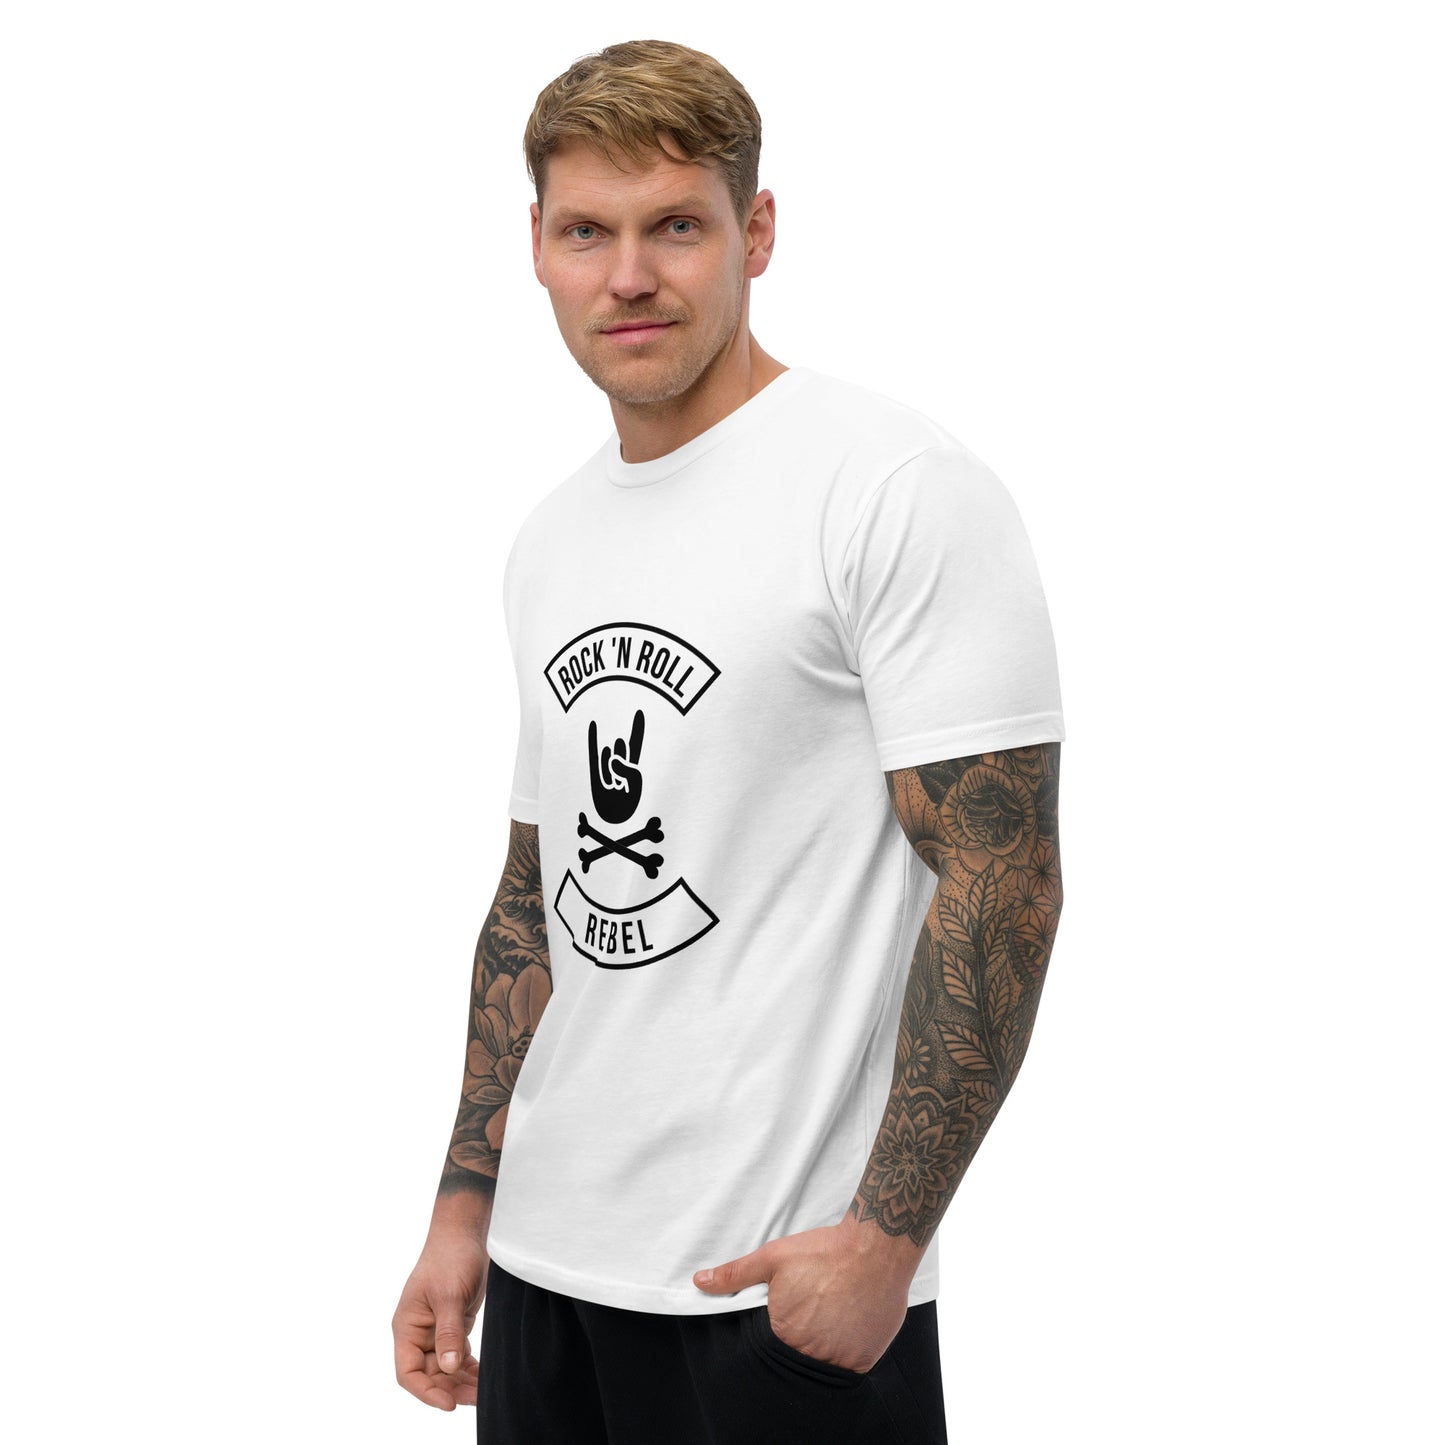 ROCKNROLL REBEL Men Fitted White T-shirt